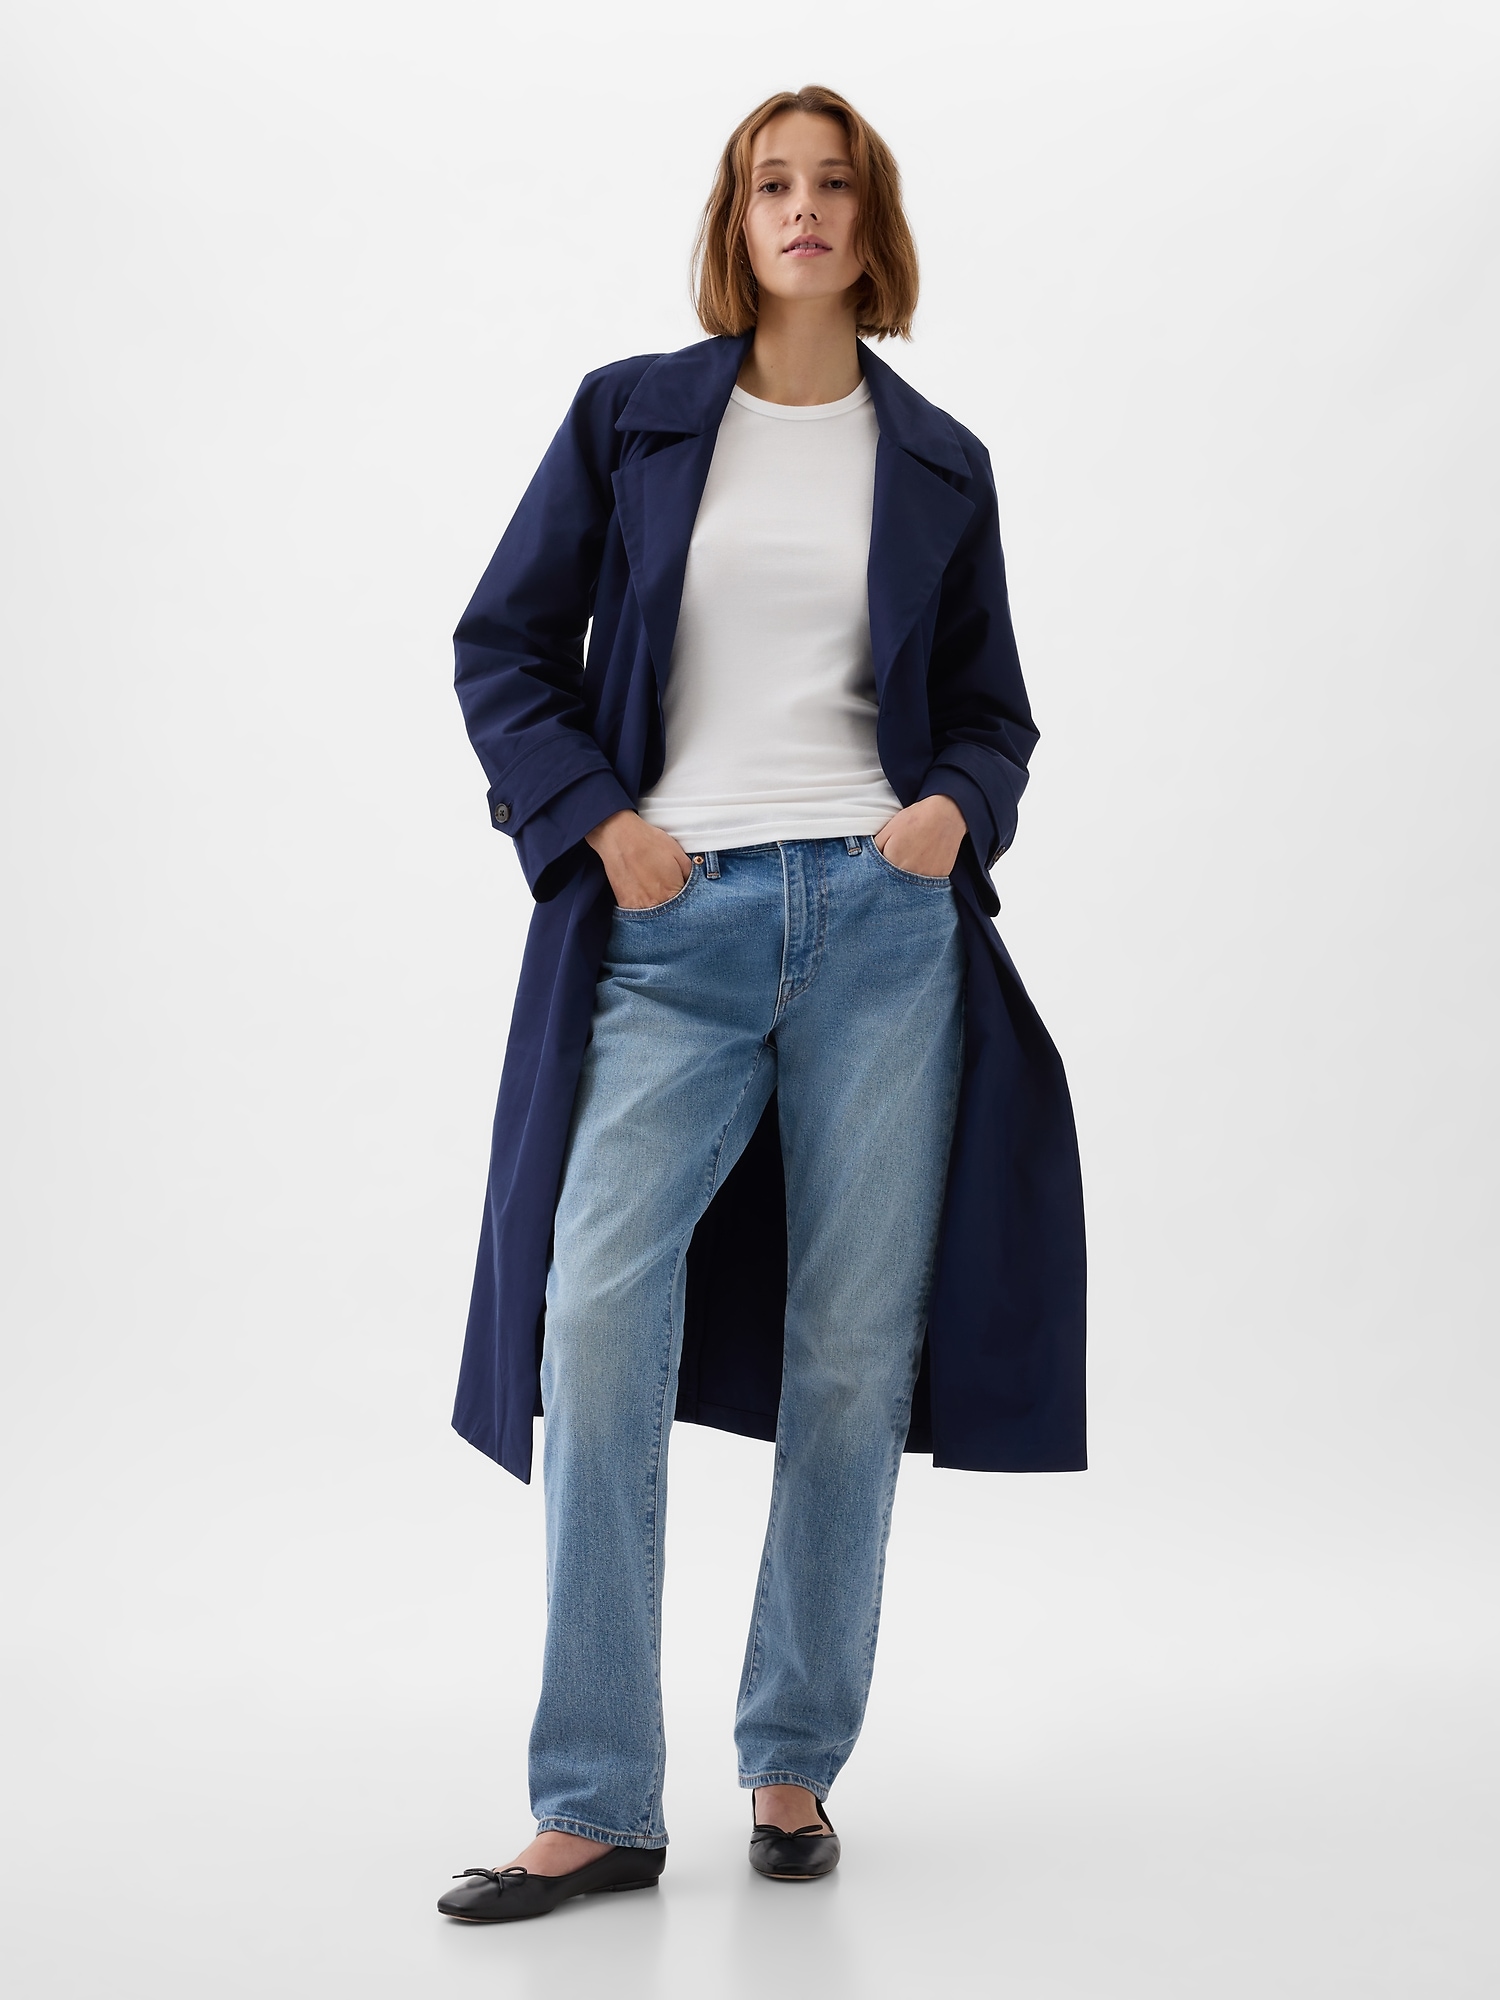 Kcocoo Womens Artificial Wool Coat Trench Jacket Ladies Warm Long Overcoat  Outwear Navy XL 